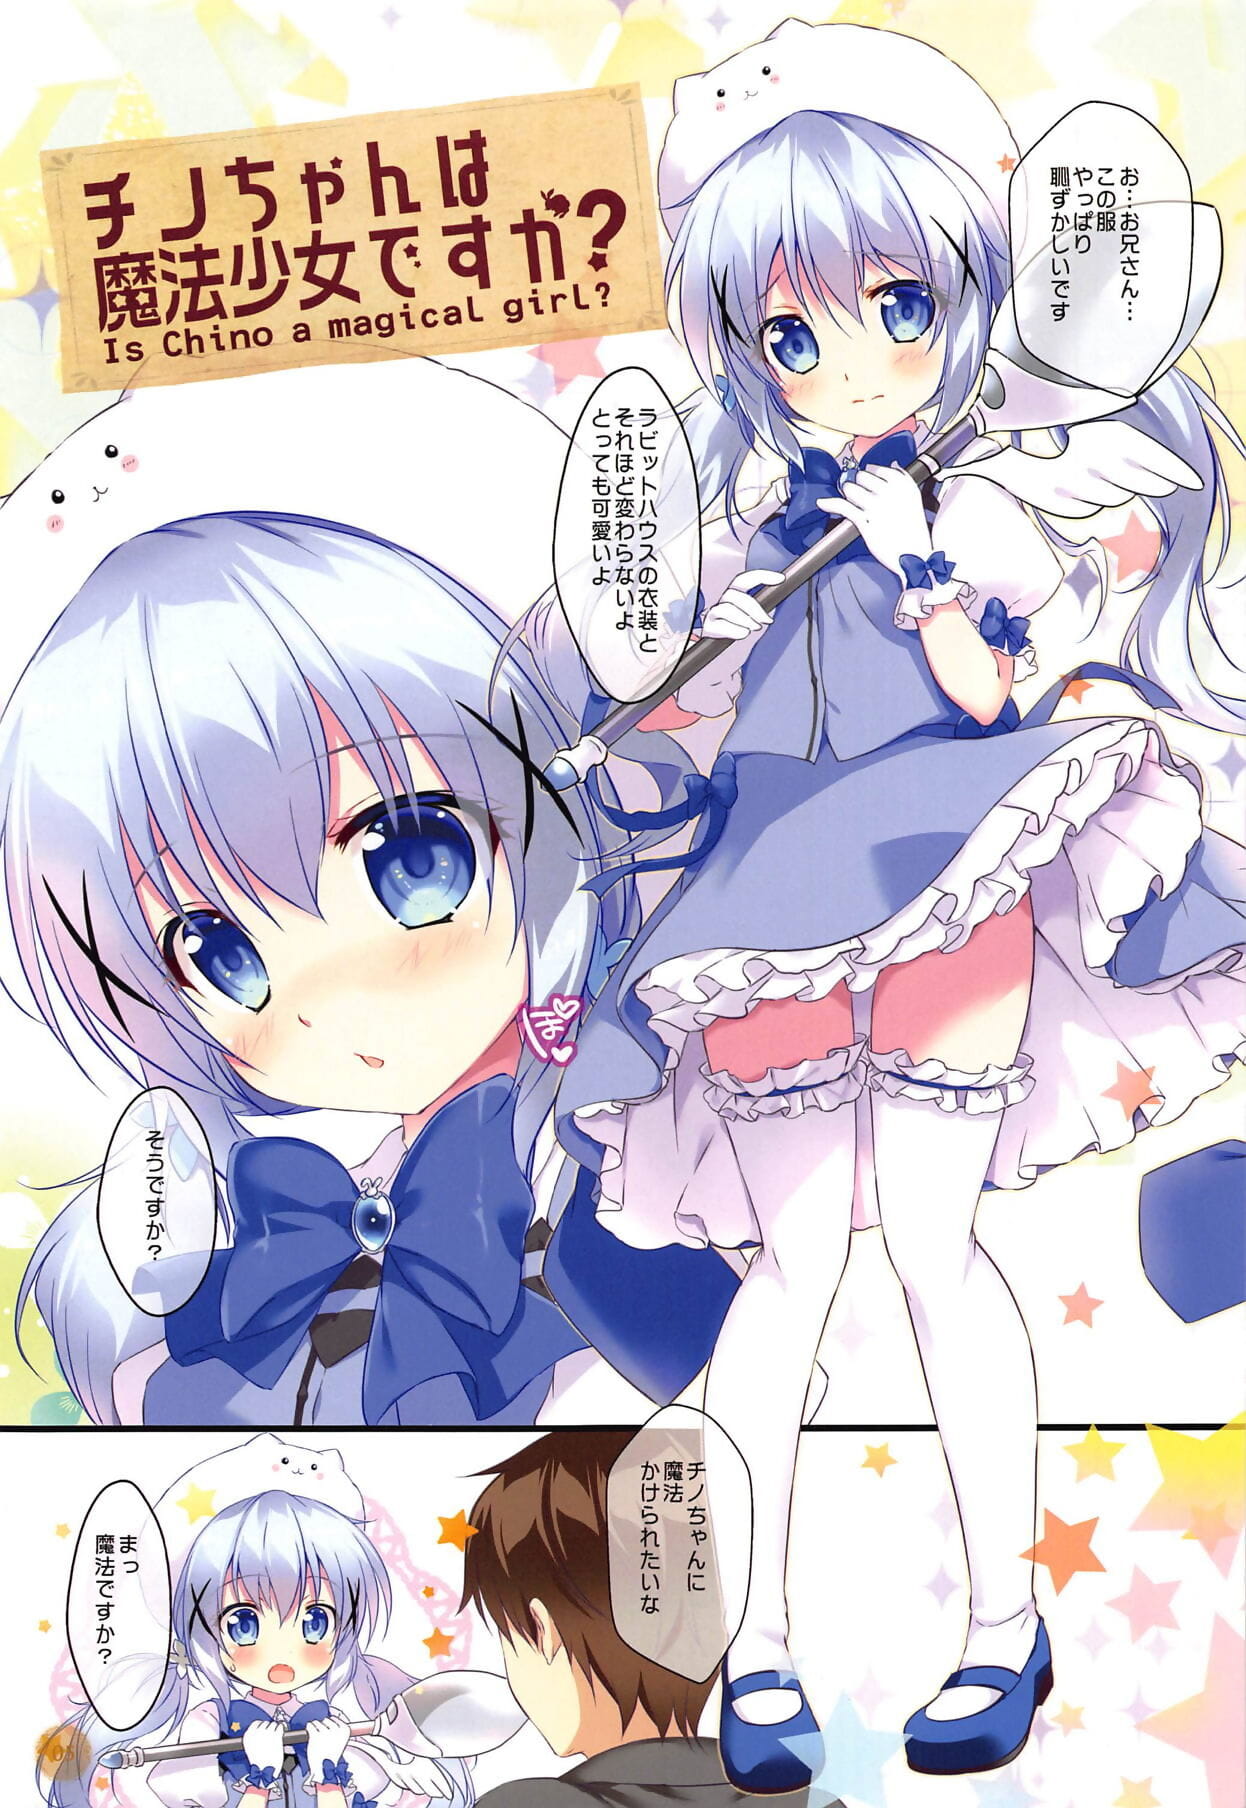 Chino-chan wa Mahou Shoujo desu ka? - Is Chino a magical girl? page 1